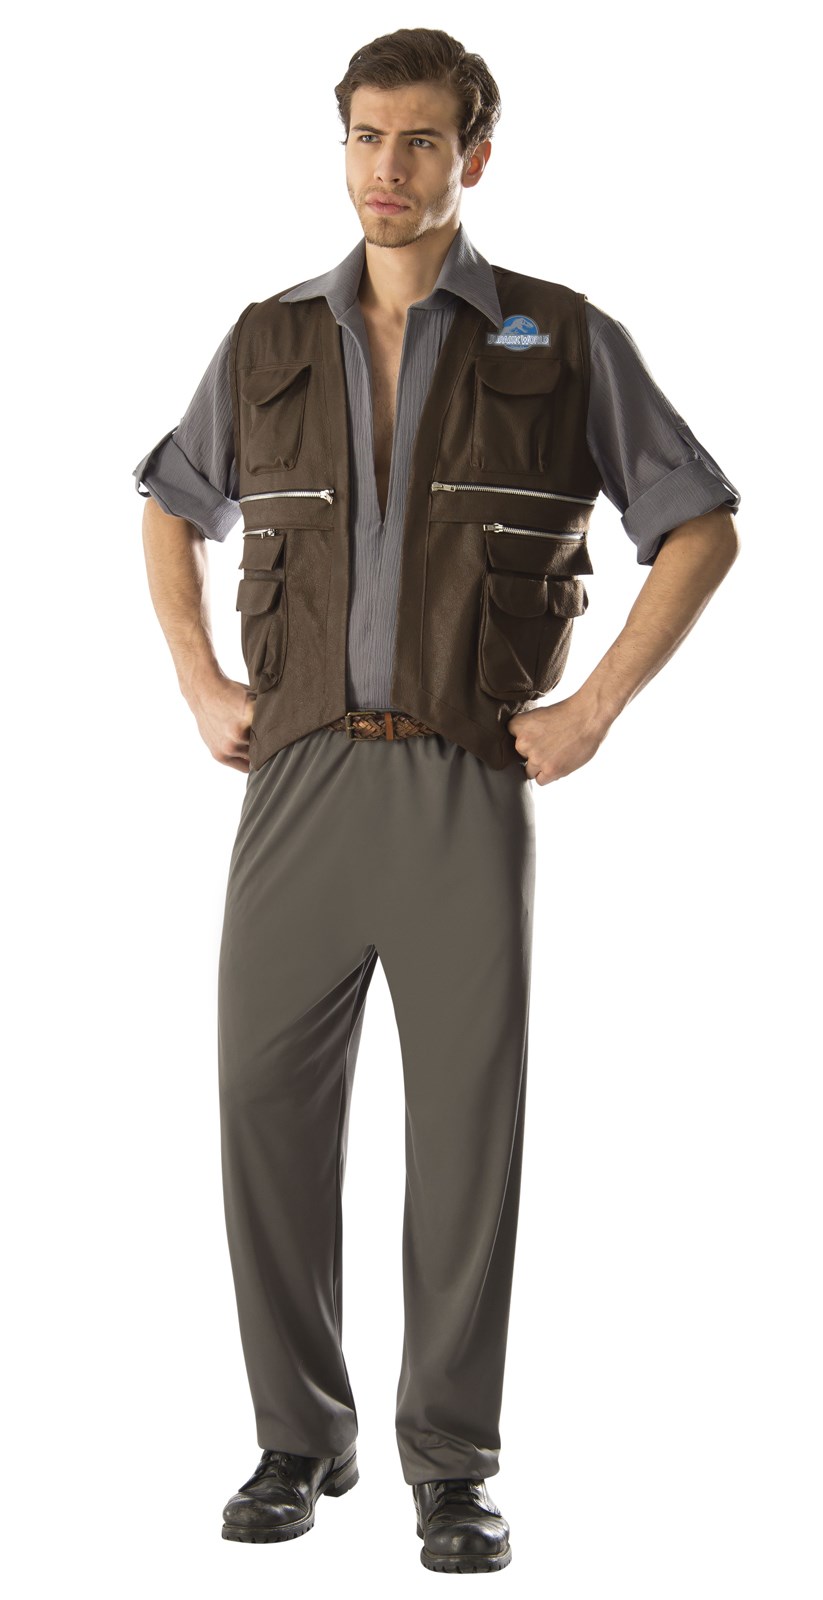 Jurassic World: Adult Deluxe Owen Costume